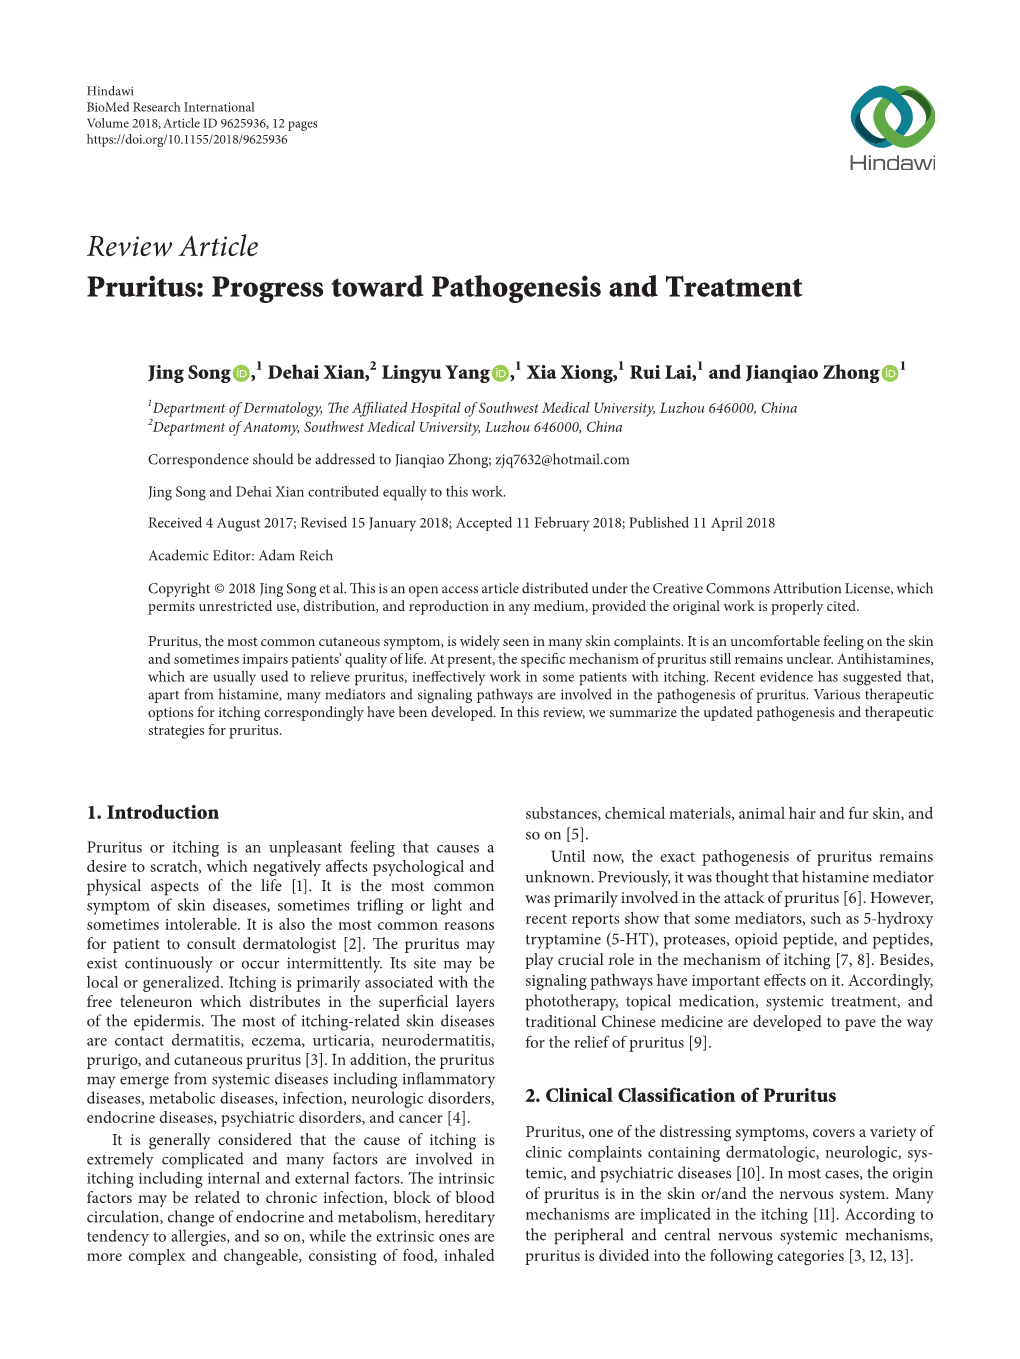 Review Article Pruritus: Progress Toward Pathogenesis and Treatment